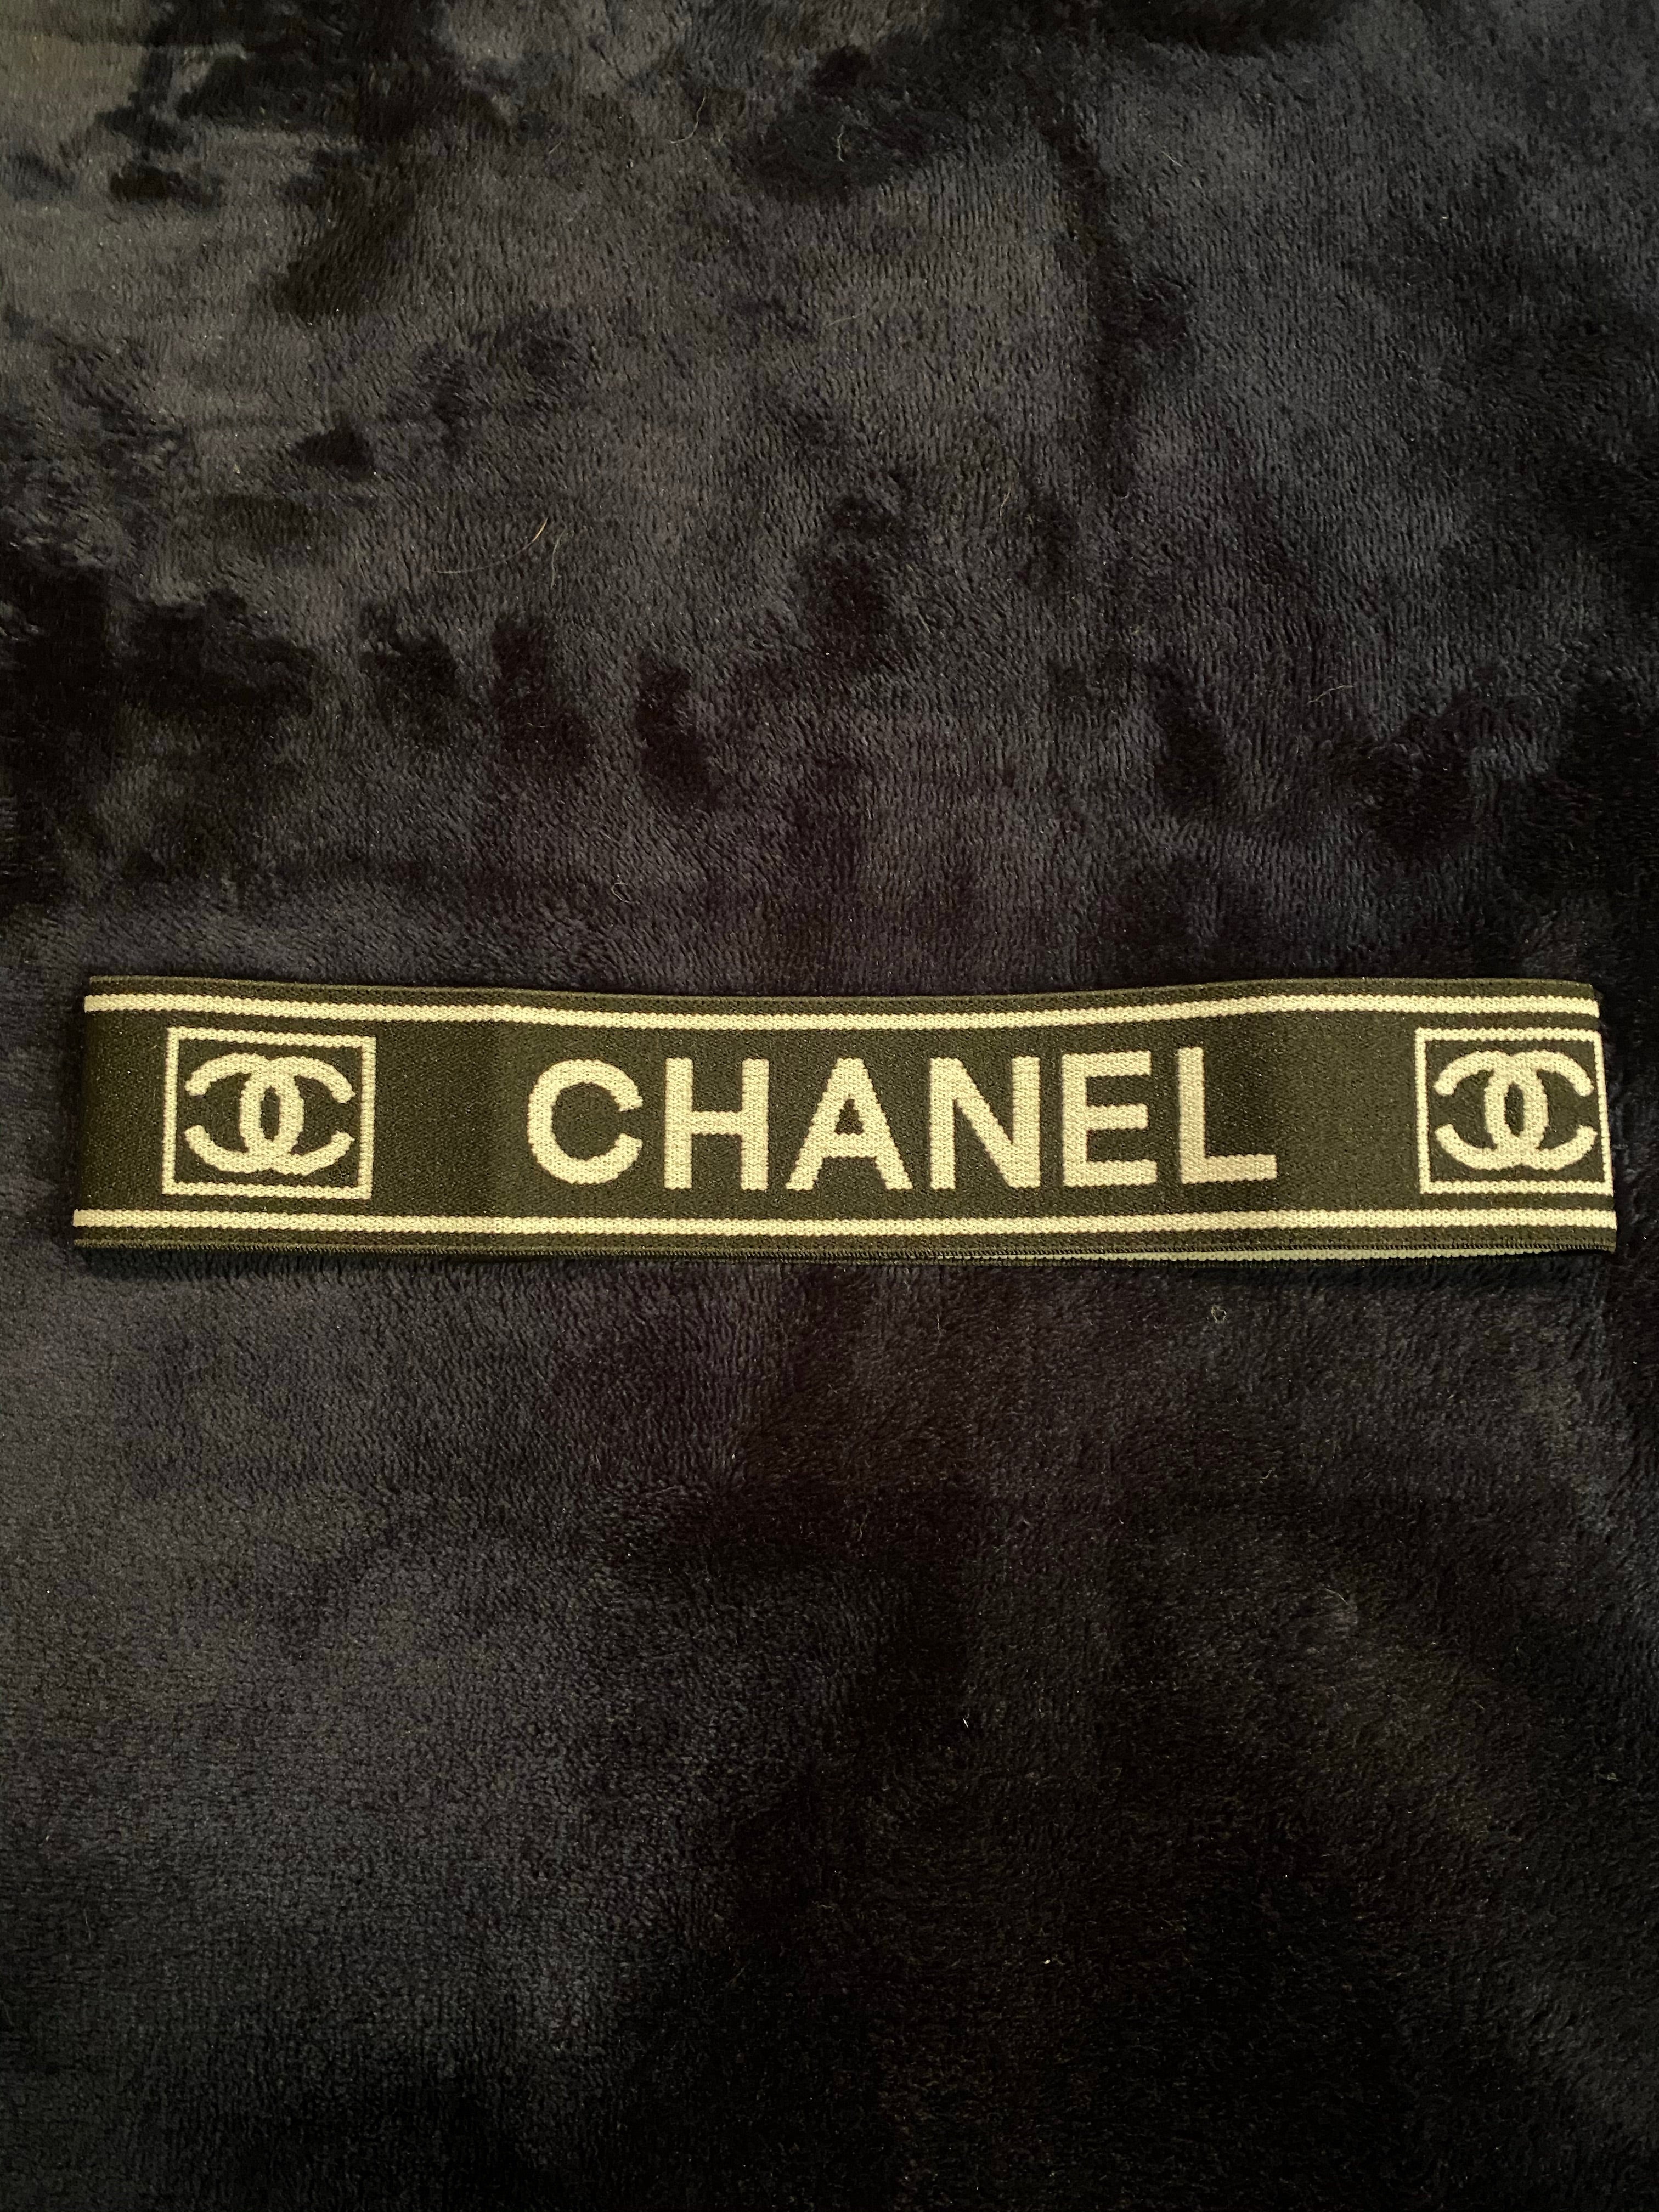 Chanel Elastic Headband